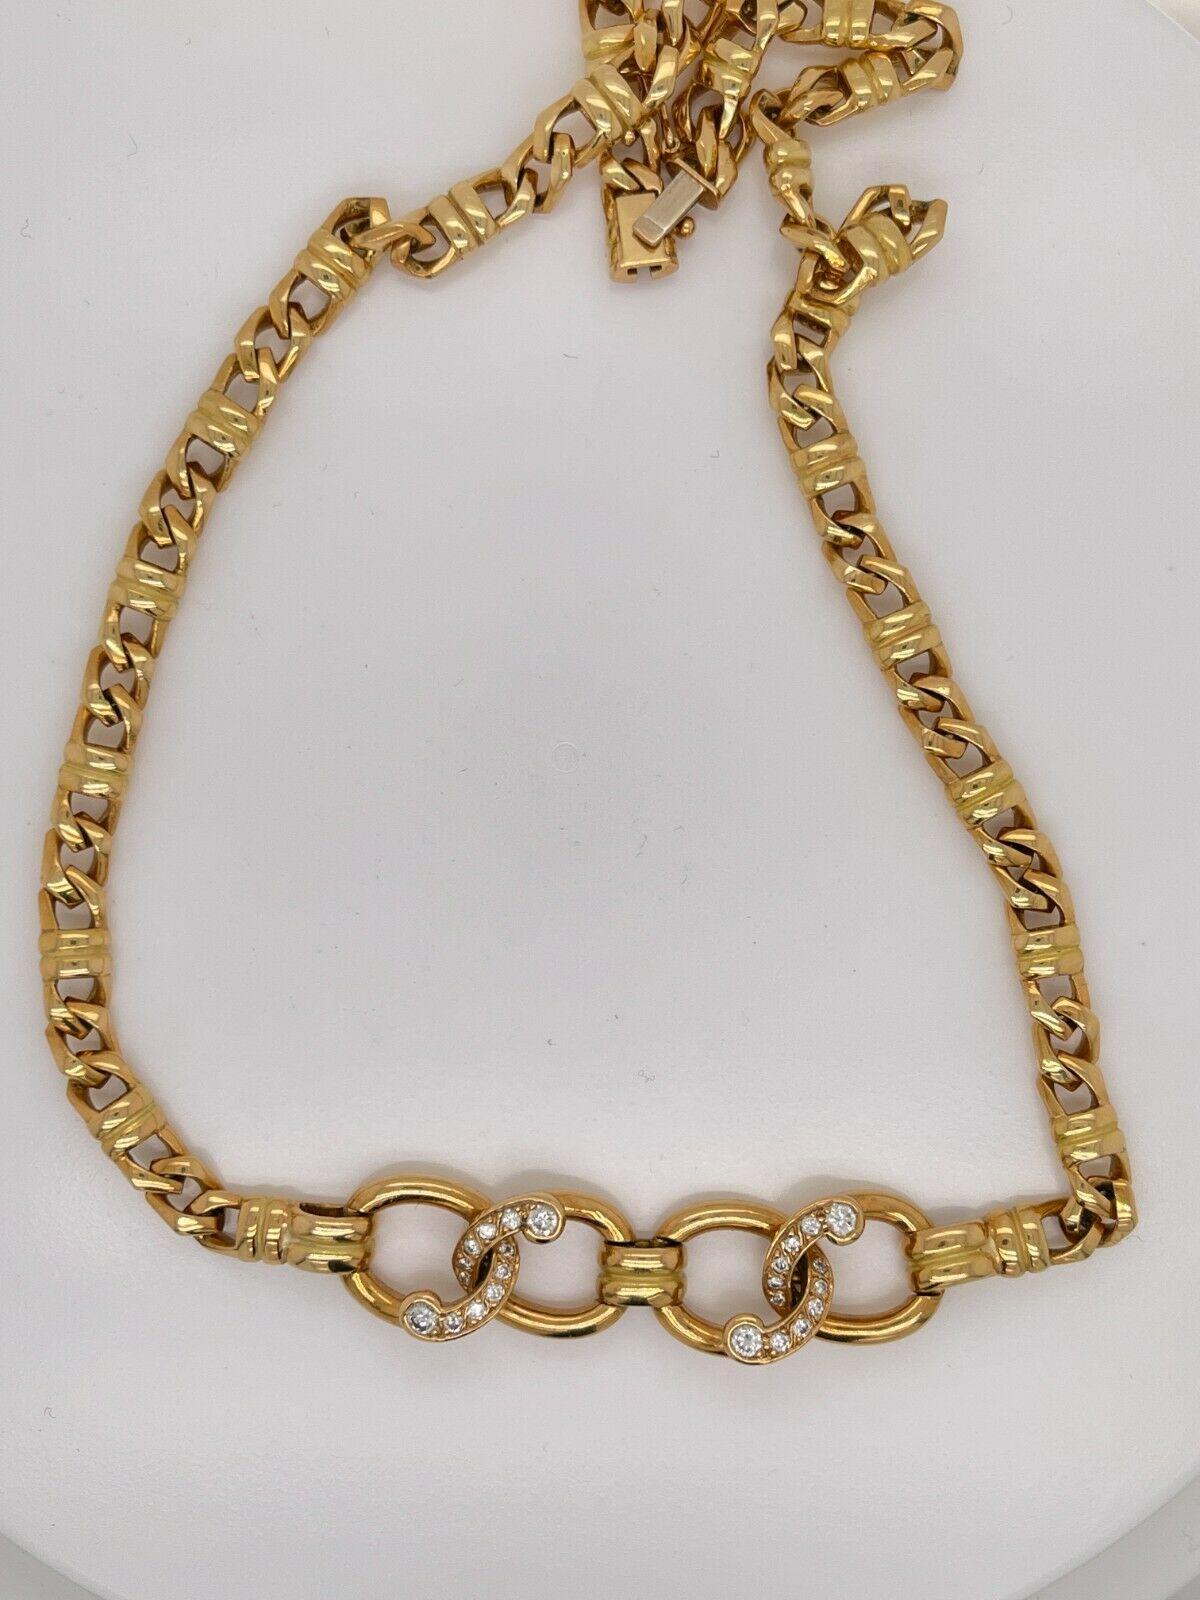 Chaumet Paris 18k Yellow Gold & Diamond Link Necklace Vintage, Circa 1970s